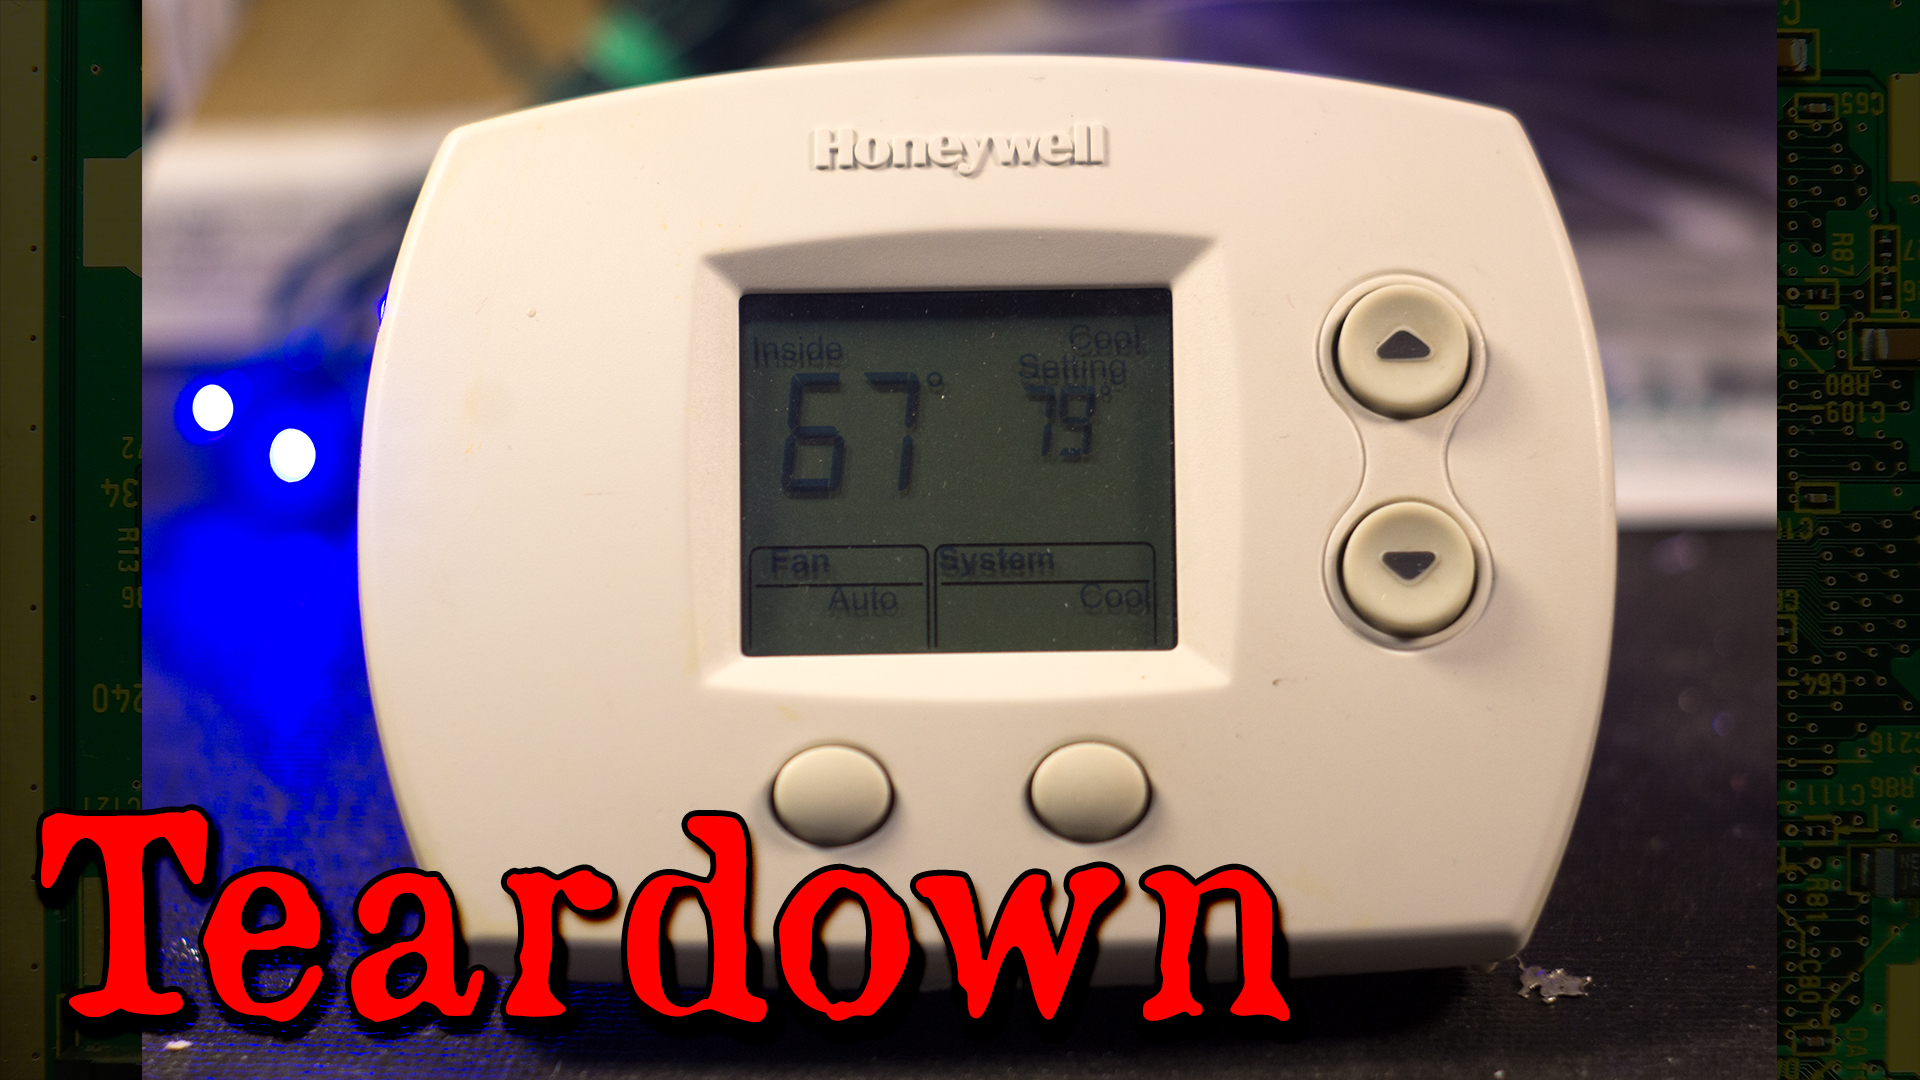 Honeywell Basic Electronic Thermostat Teardown